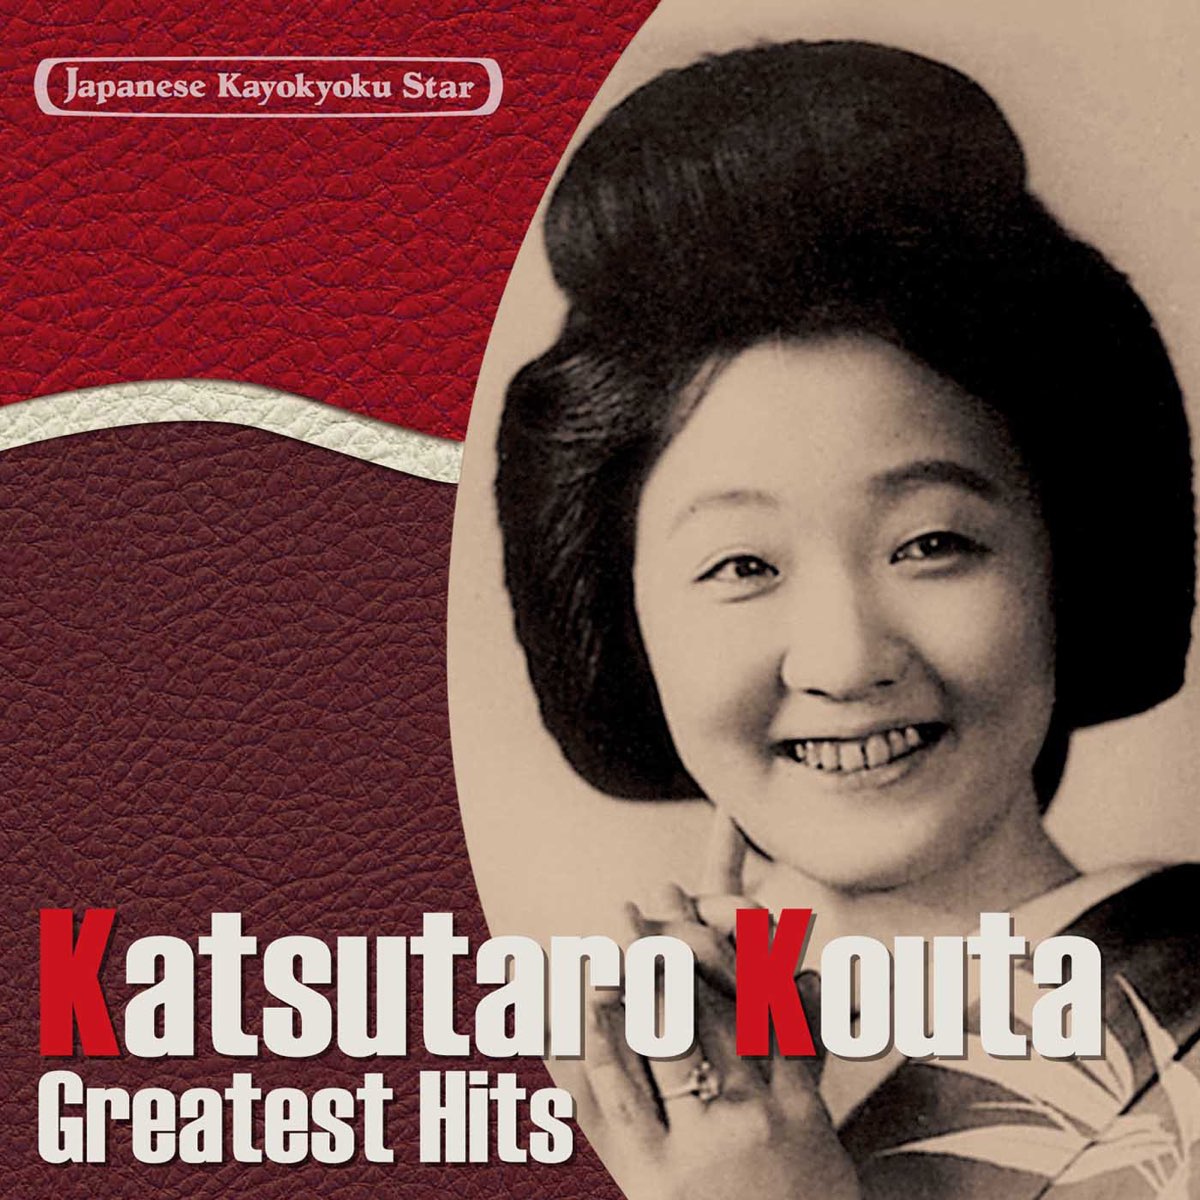 Japanese Kayokyoku Star "Katsutaro Kouta" Greatest Hits